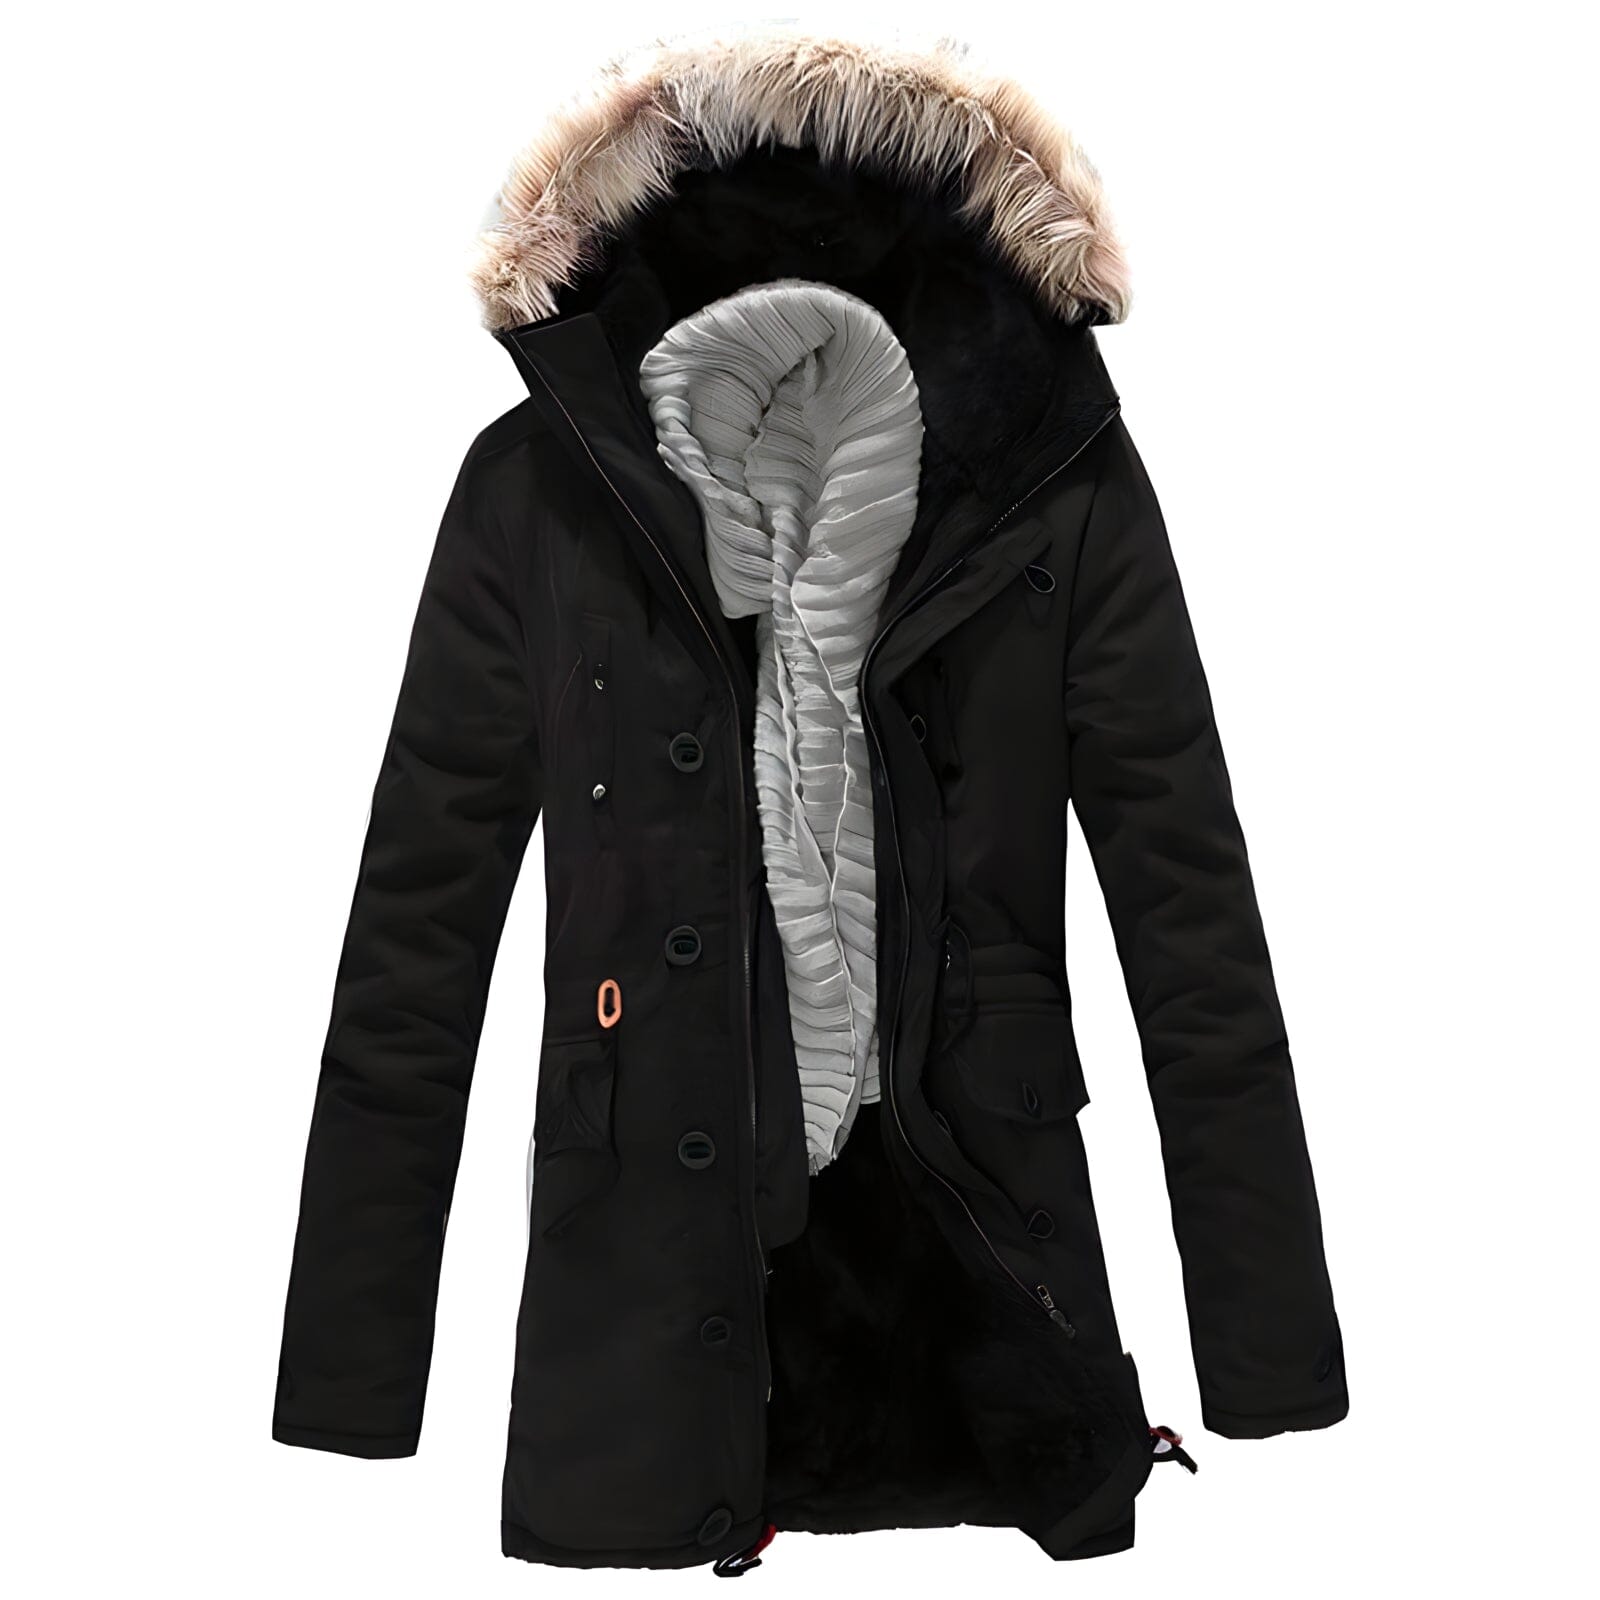 The Summit Faux Fur Winter Jacket - Multiple Colors